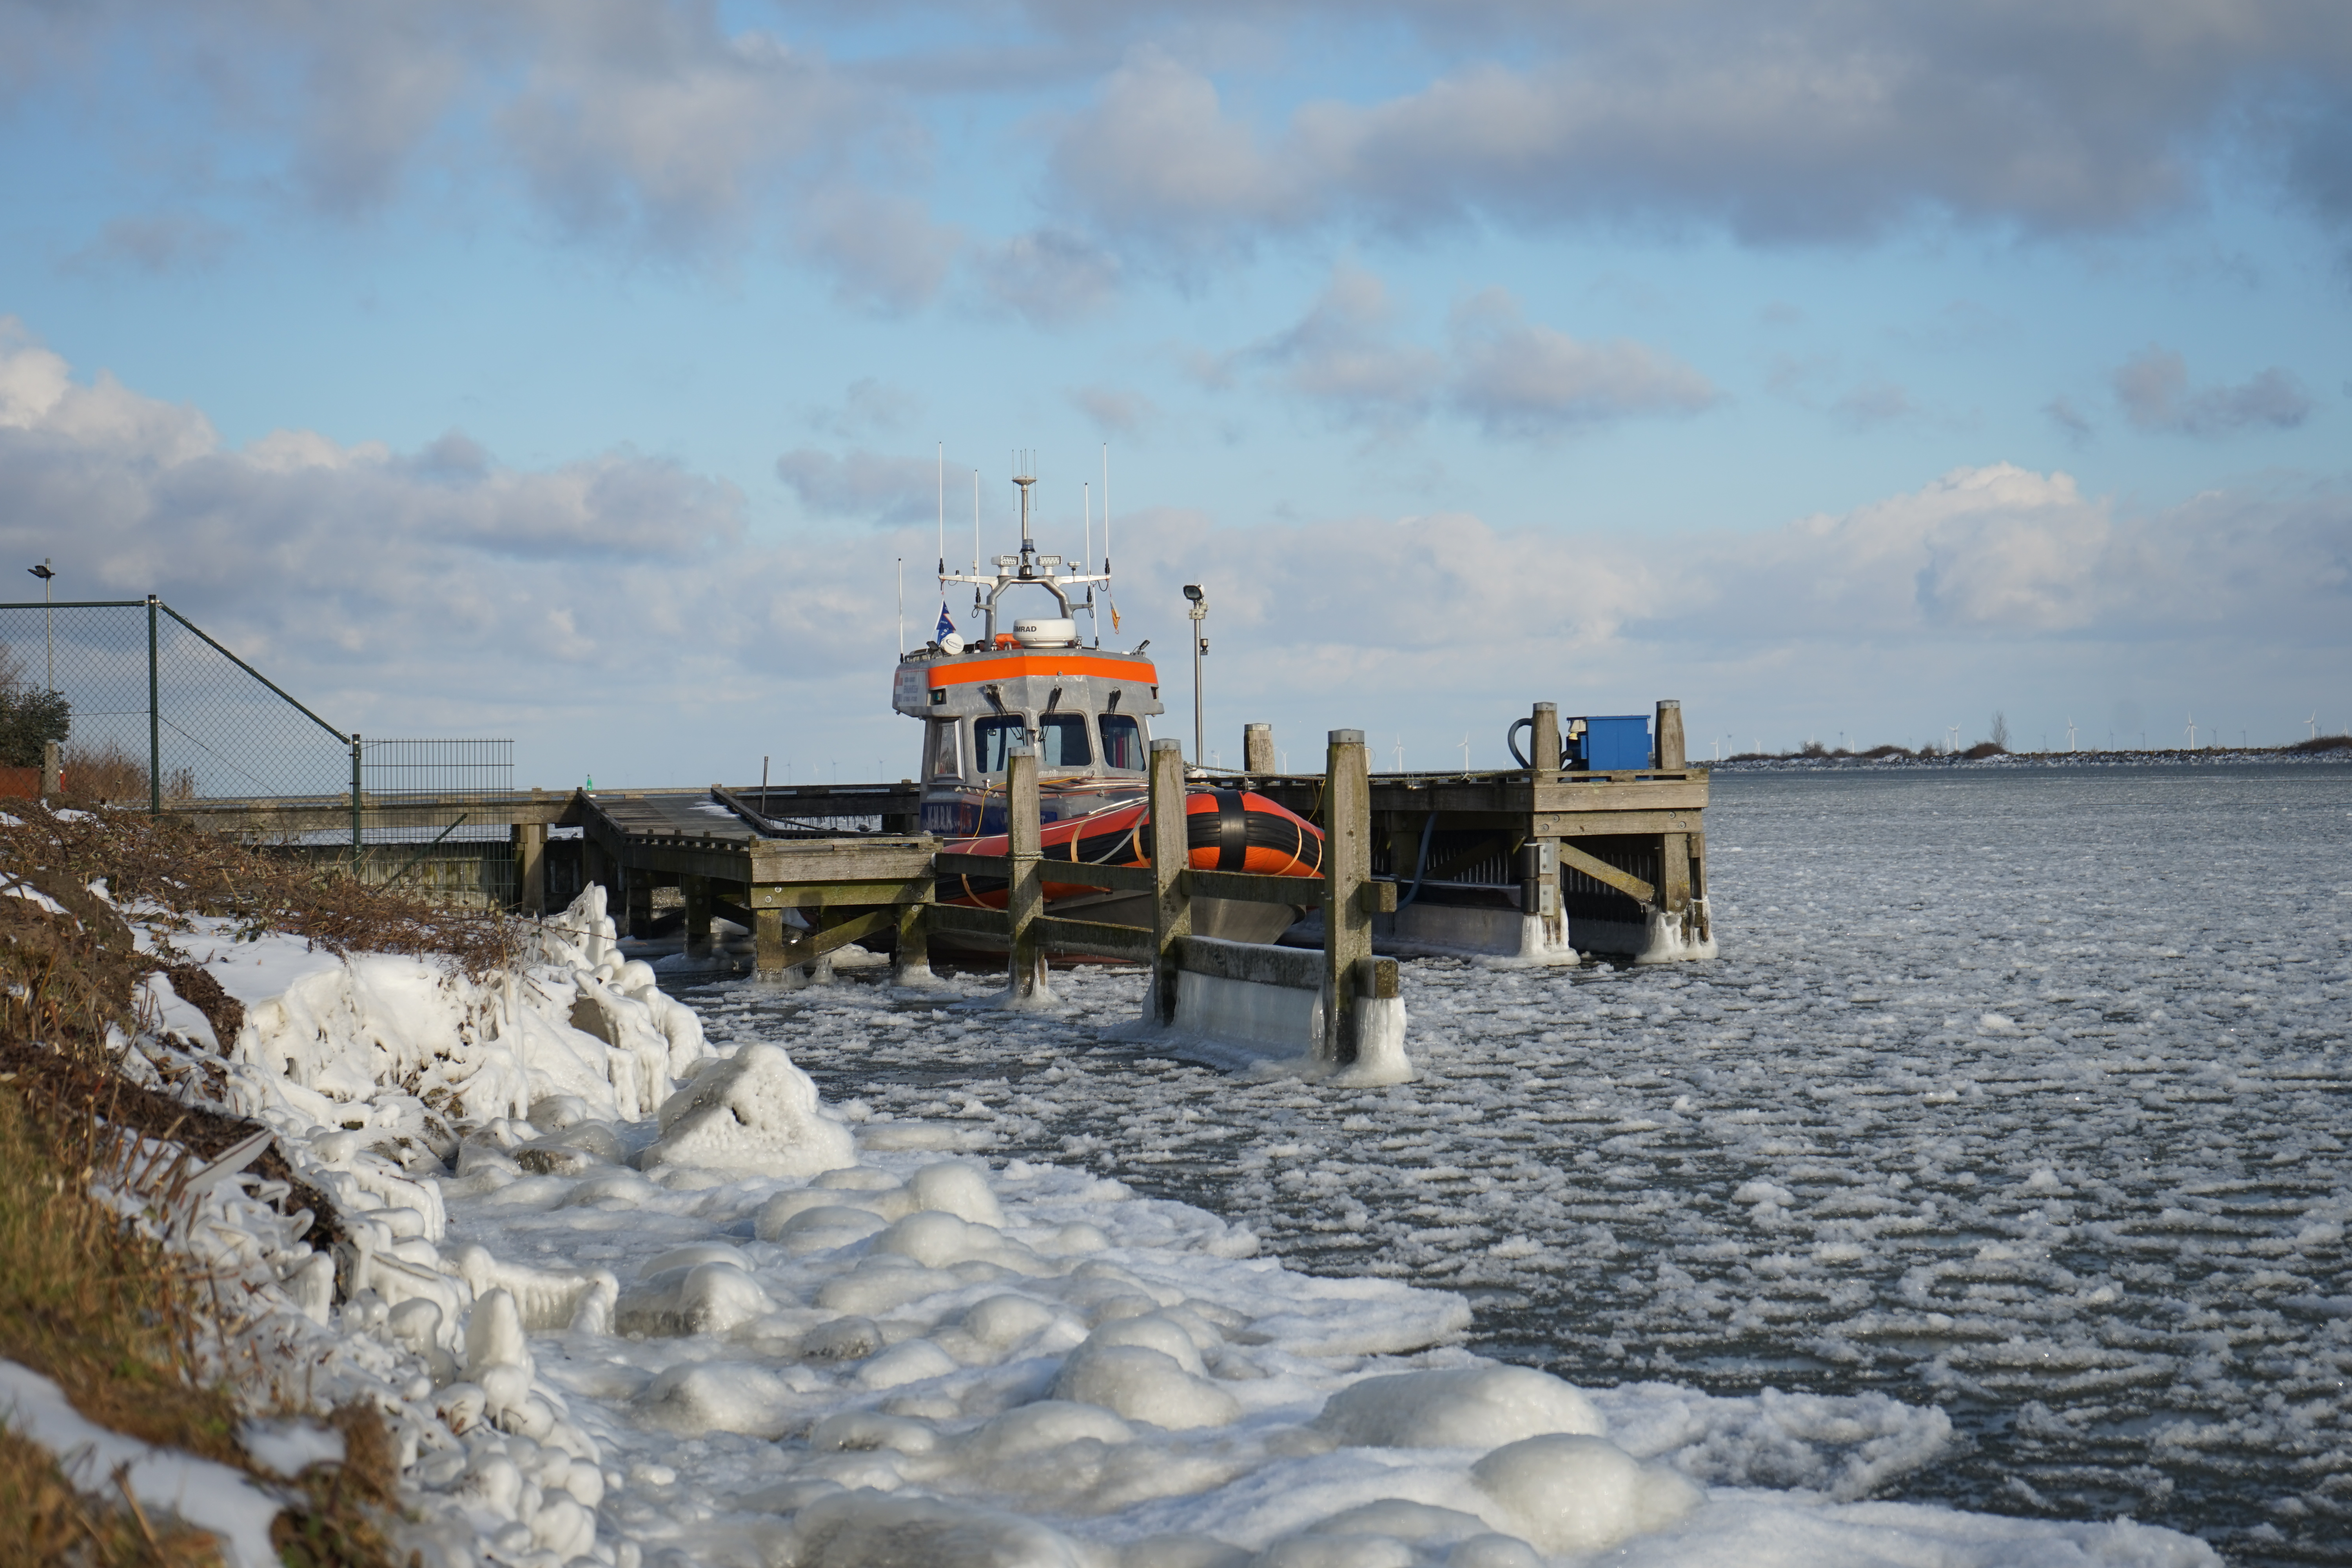 KNRM reddingboot Watersport vast in het ijs.